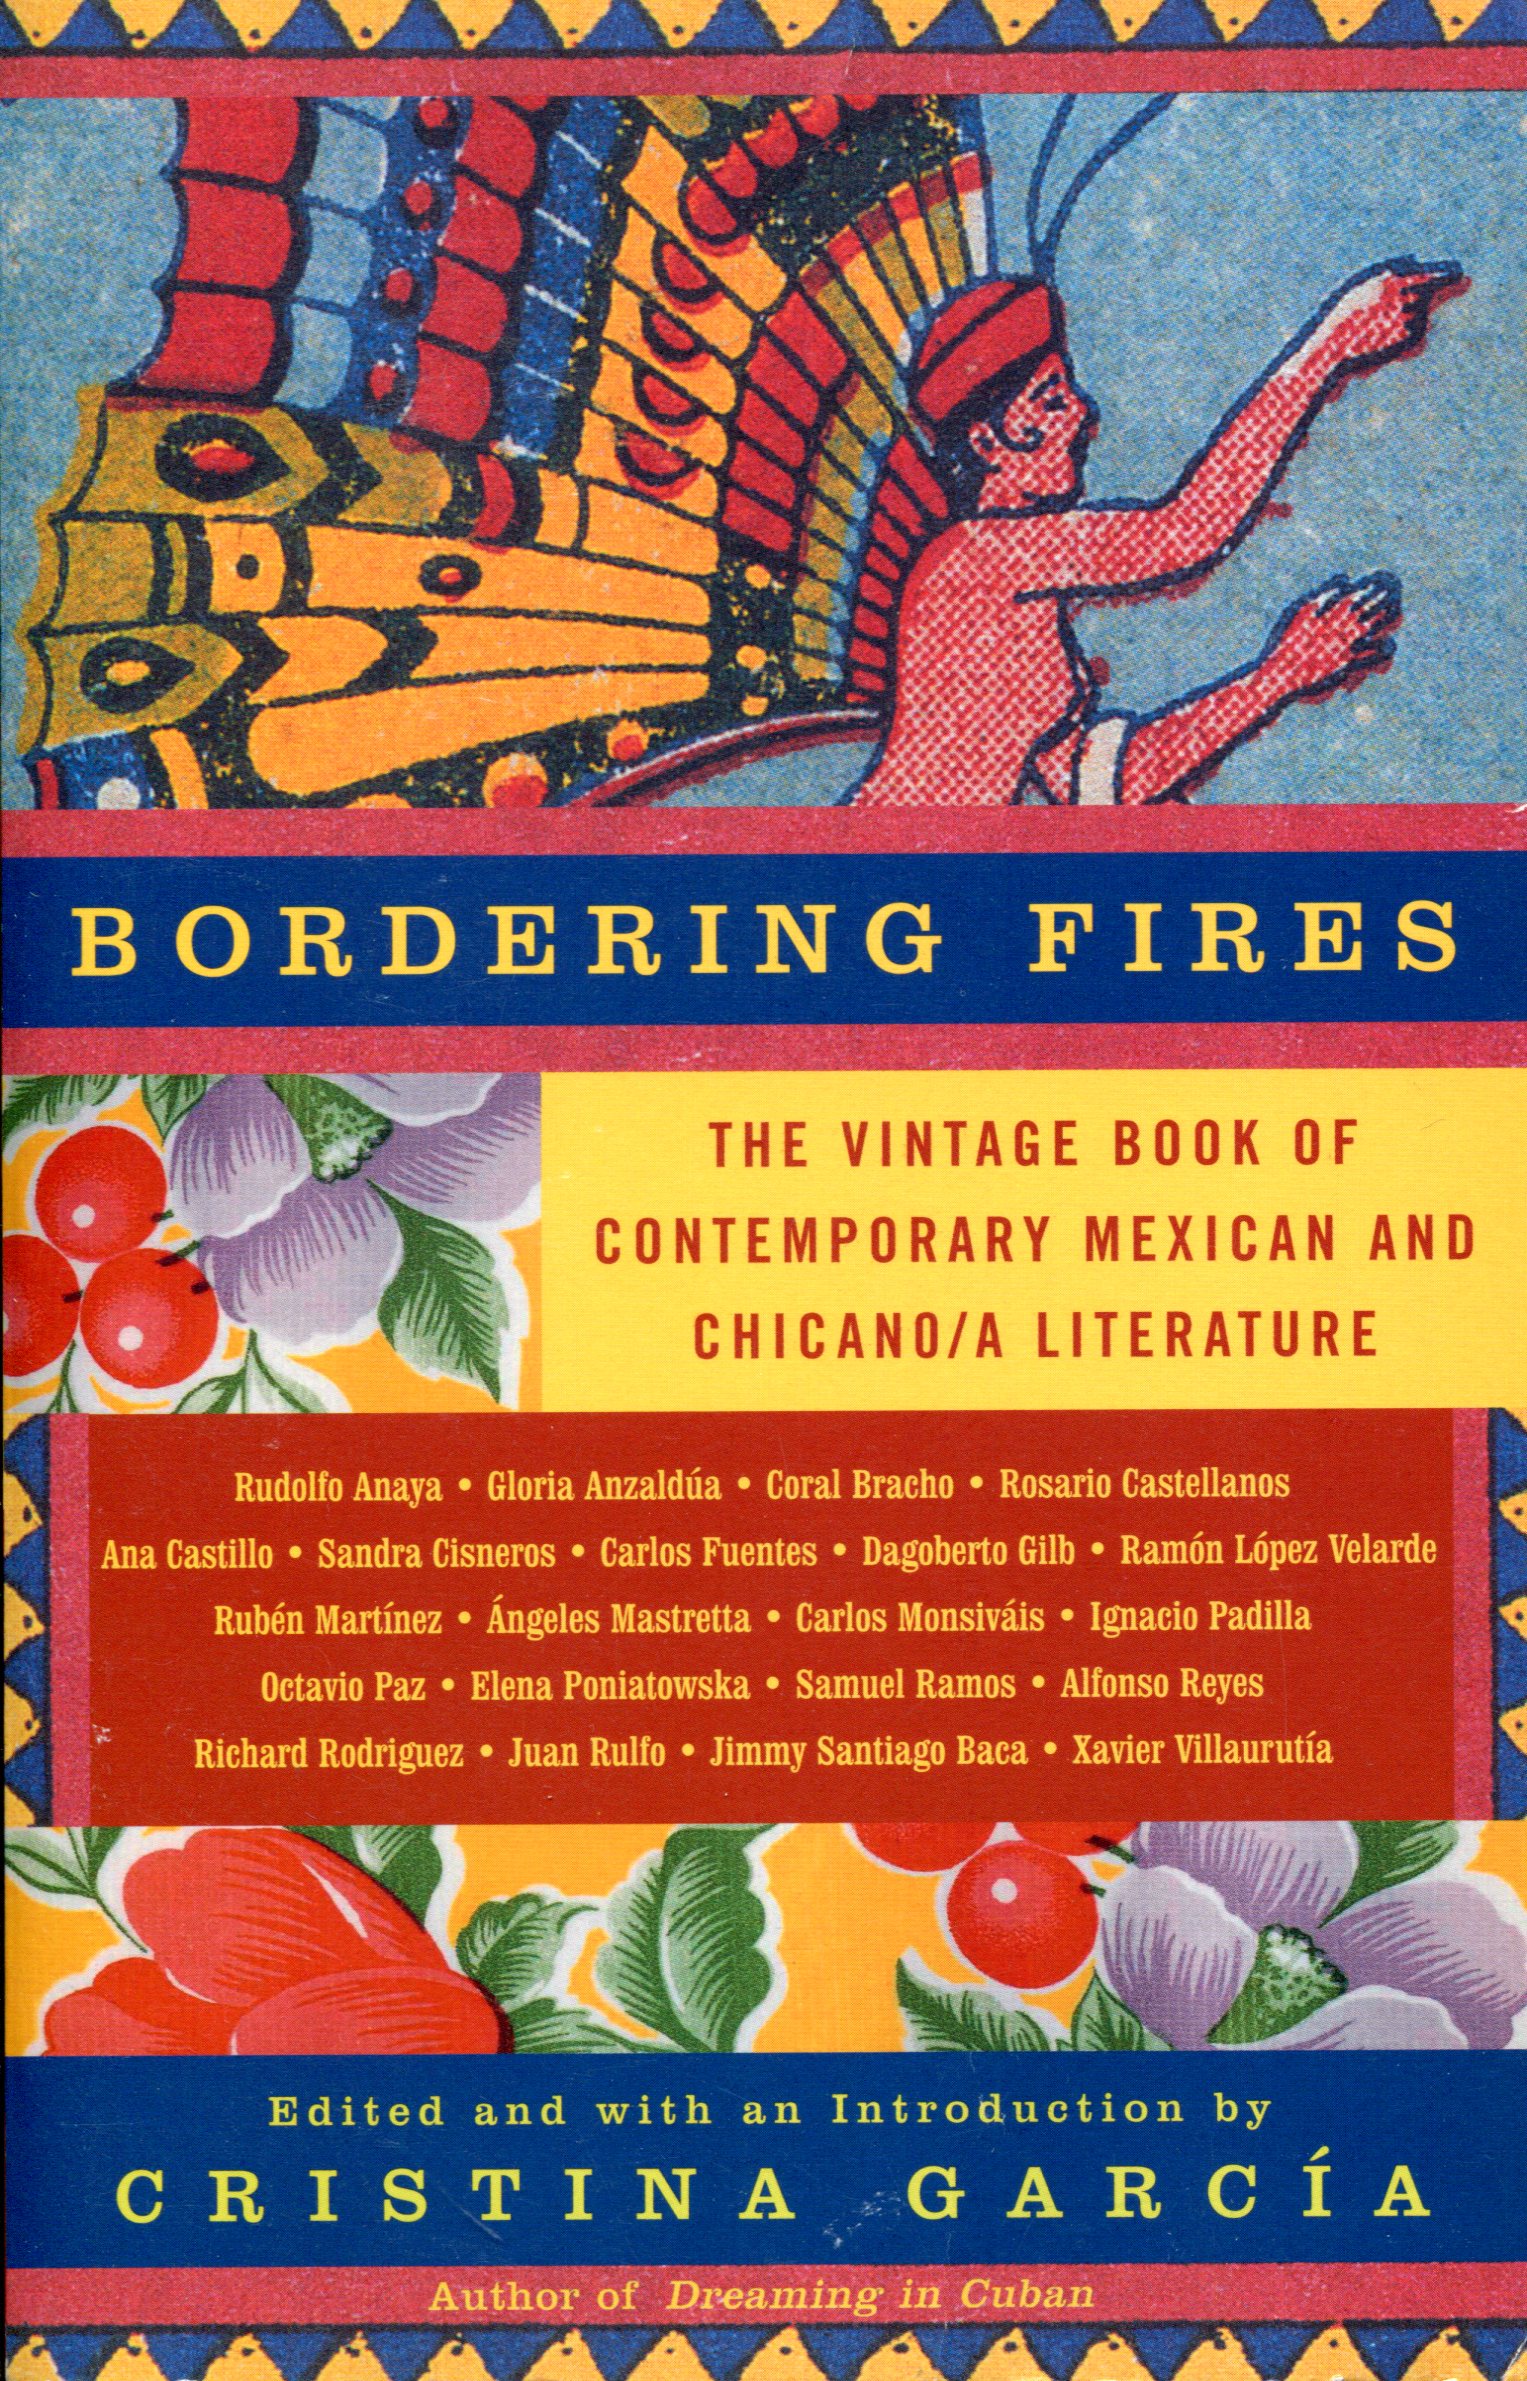 Bordering Fires by Cristina Garcia